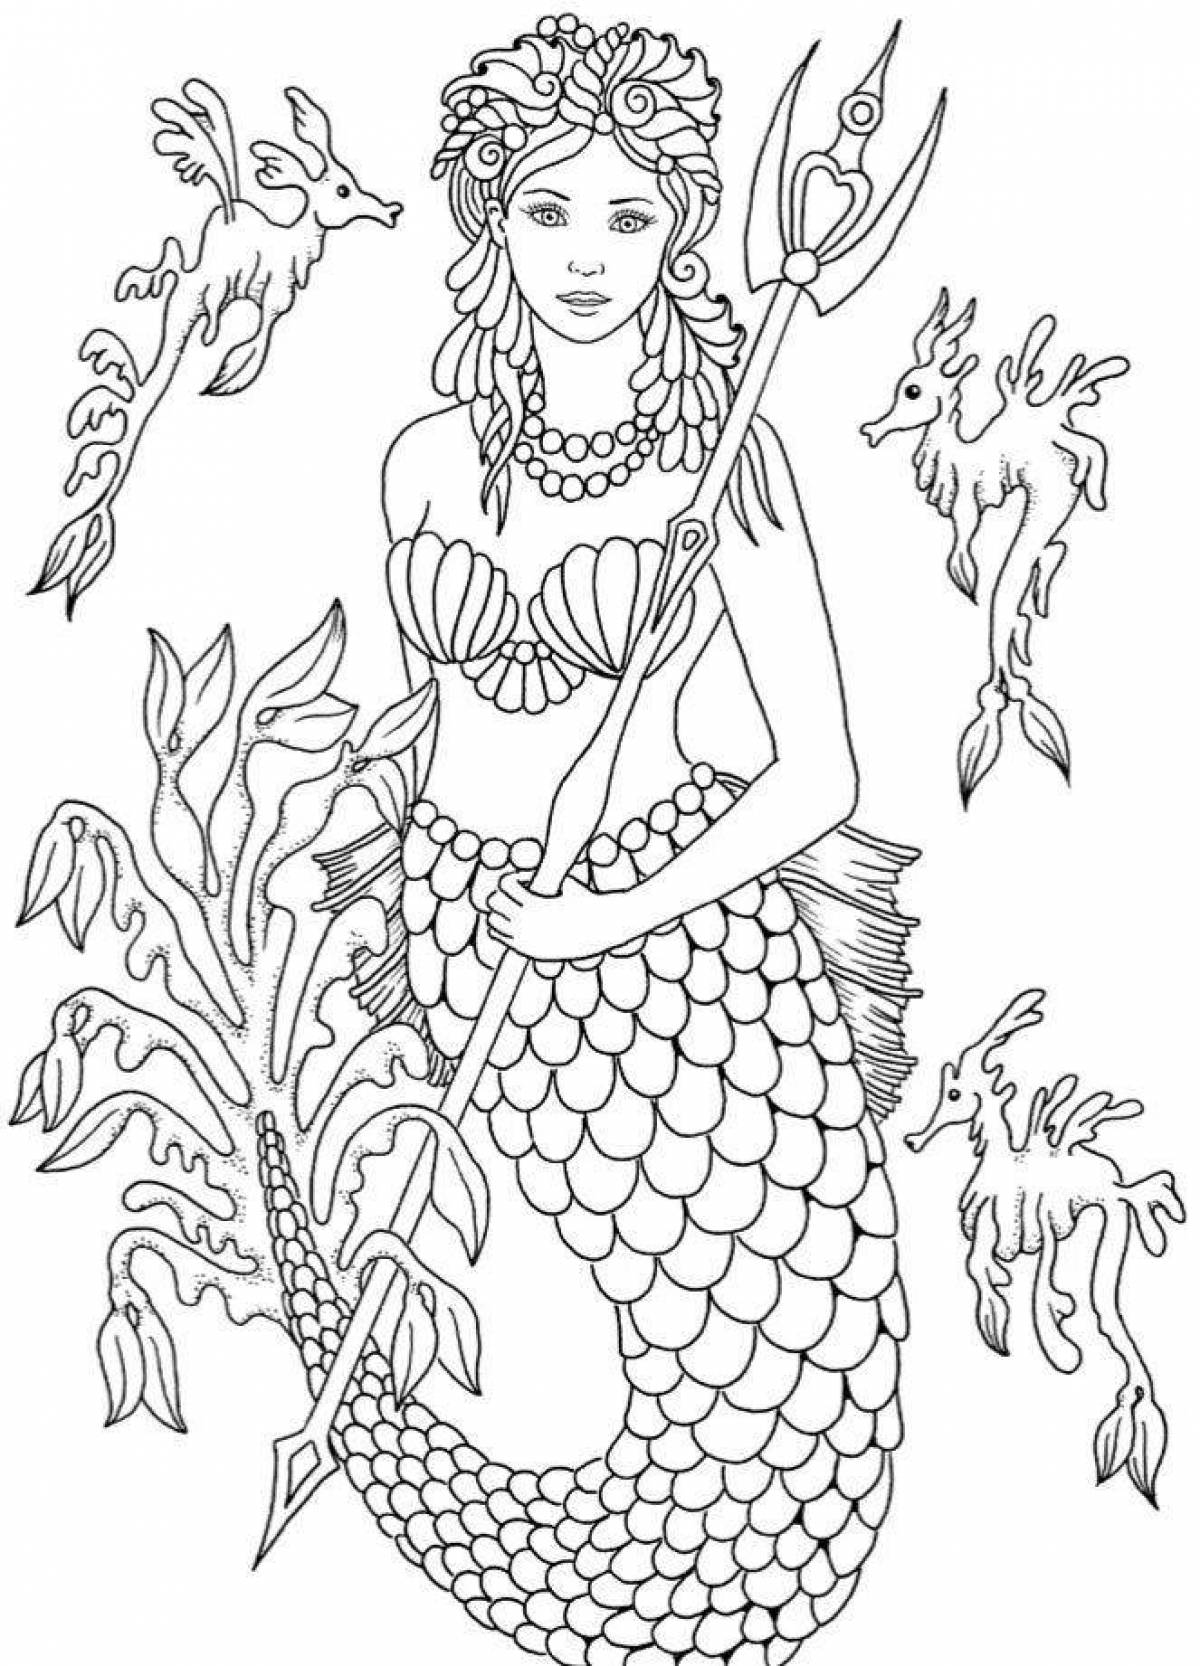 Cute mermaid antistress coloring book